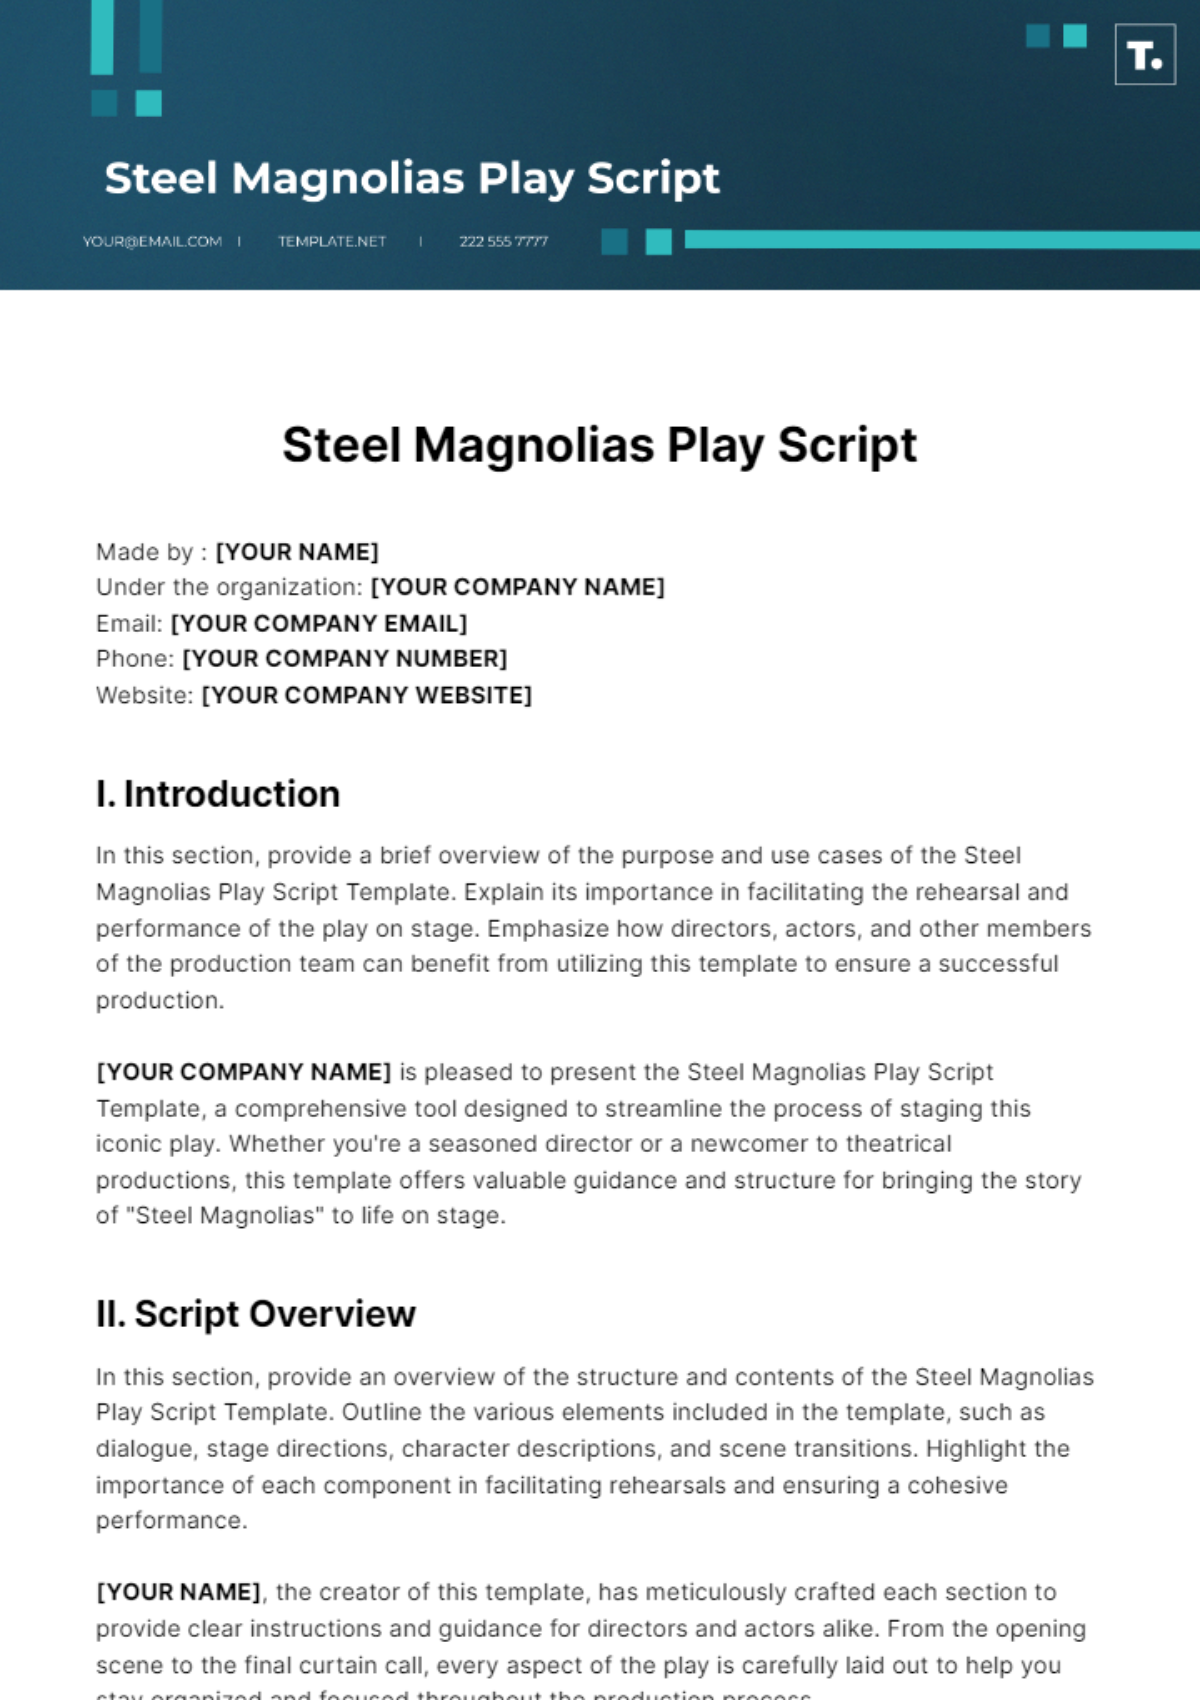 Steel Magnolias Play Script Template